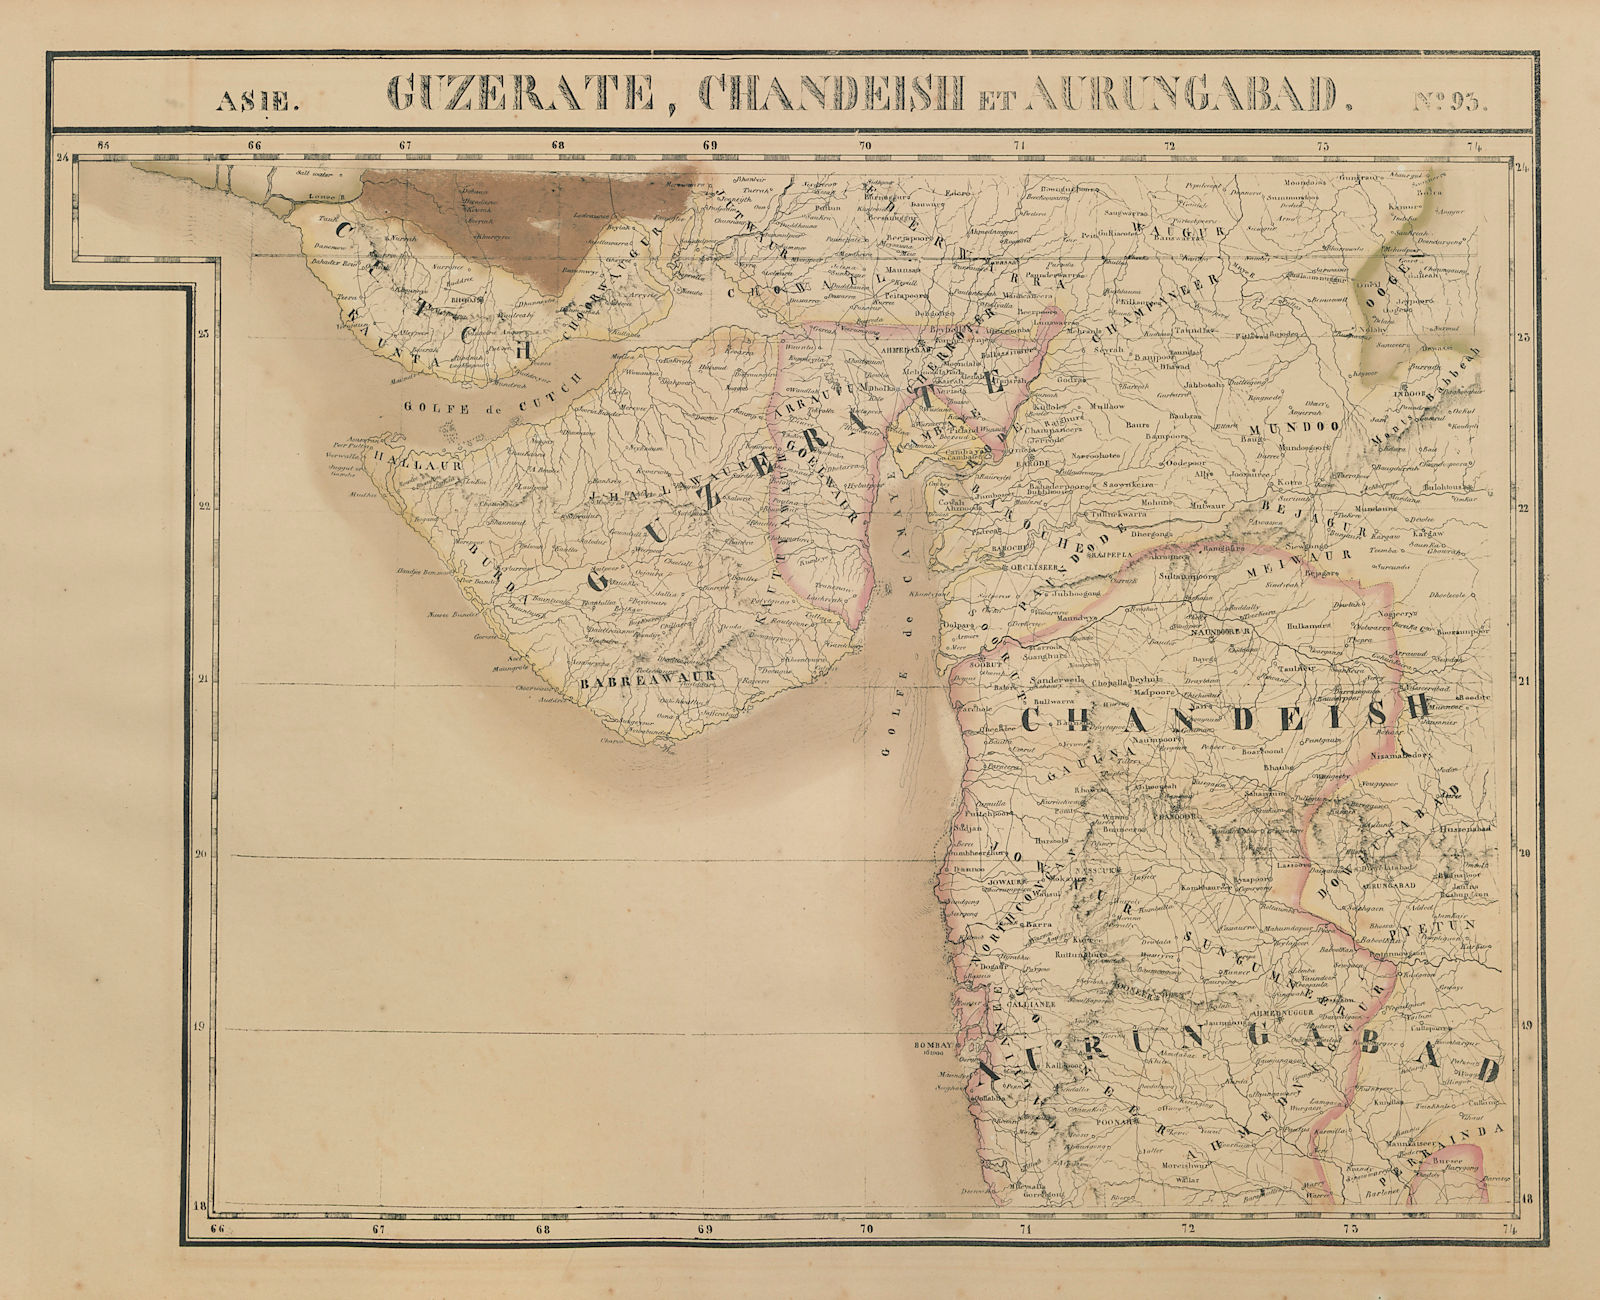 Asie Guzerate Chandeish Aurungabad 93 India Gujarat Mumbai VANDERMAELEN 1827 map